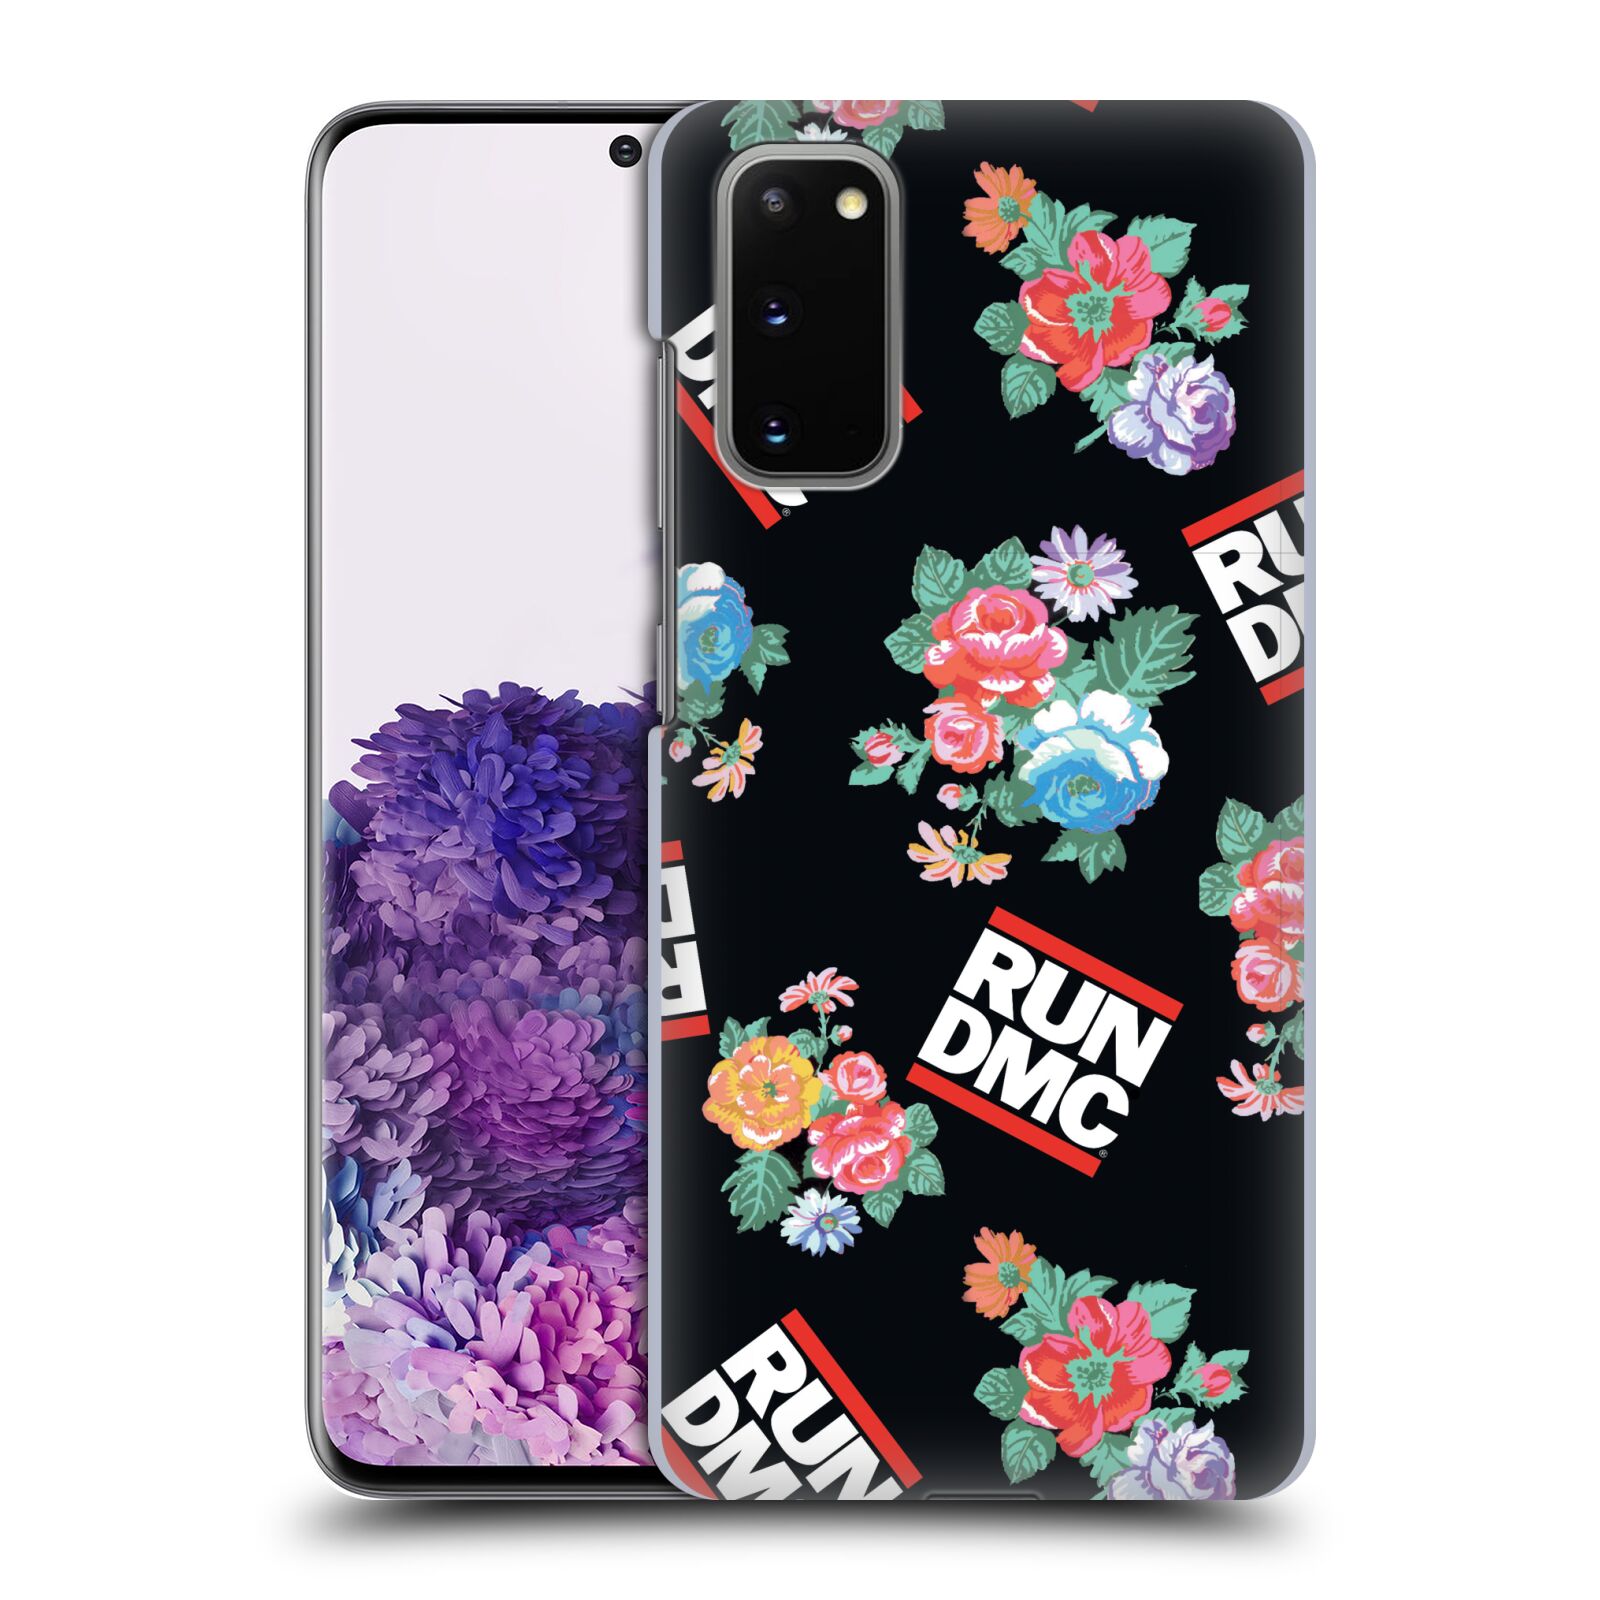 Pouzdro na mobil Samsung Galaxy S20 - HEAD CASE - rapová kapela Run DMC květiny černé pozadí